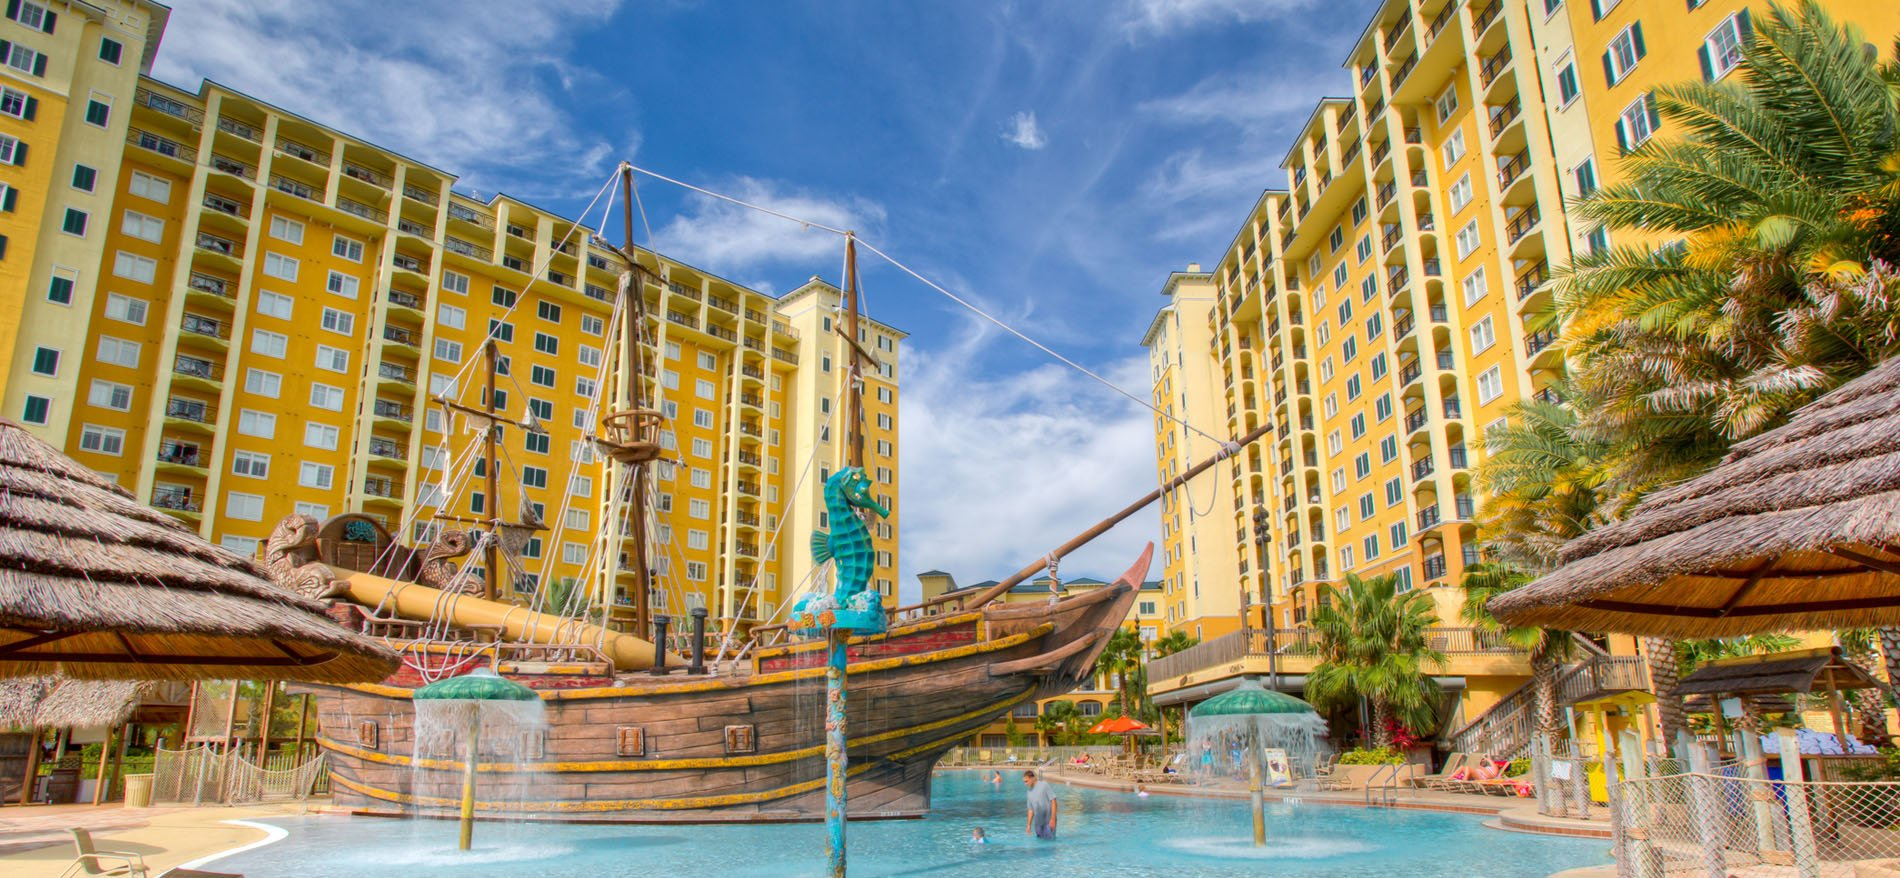 staySky Orlando Hotels & Resorts Teacher Education Discount.